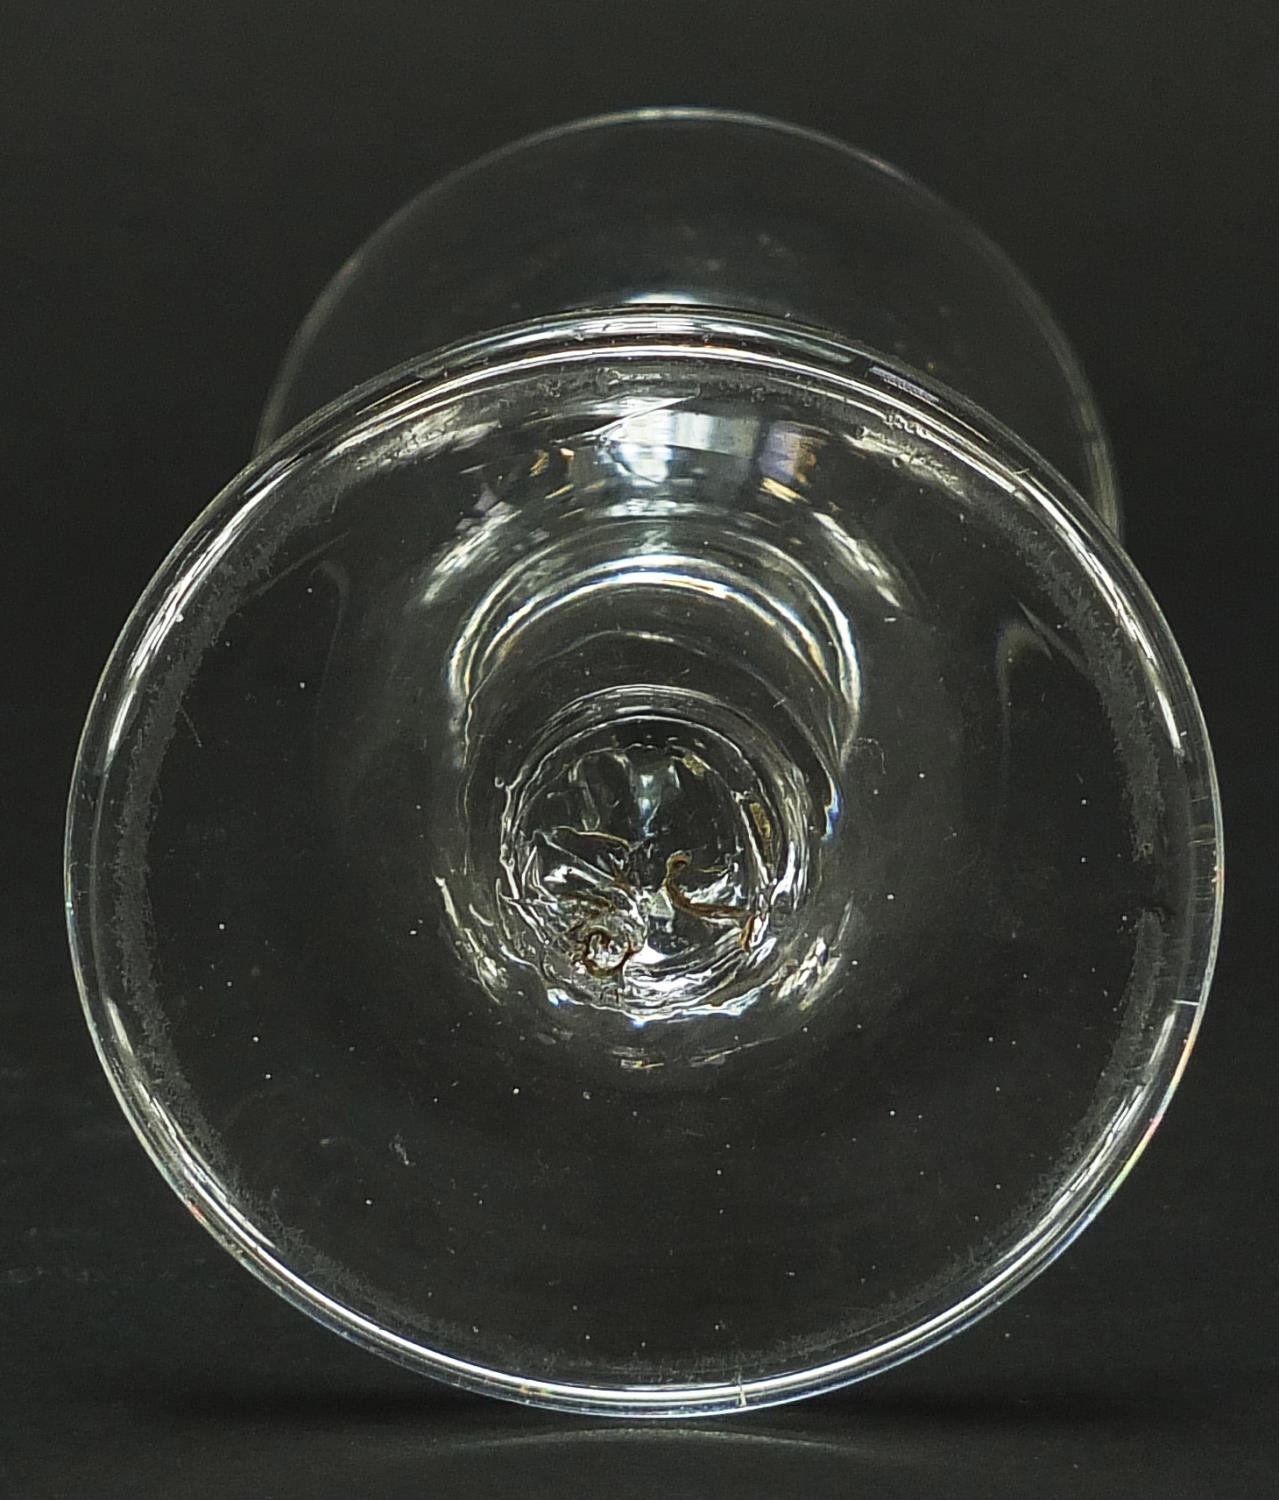 18th century wine glass, 13cm high - Image 3 of 3